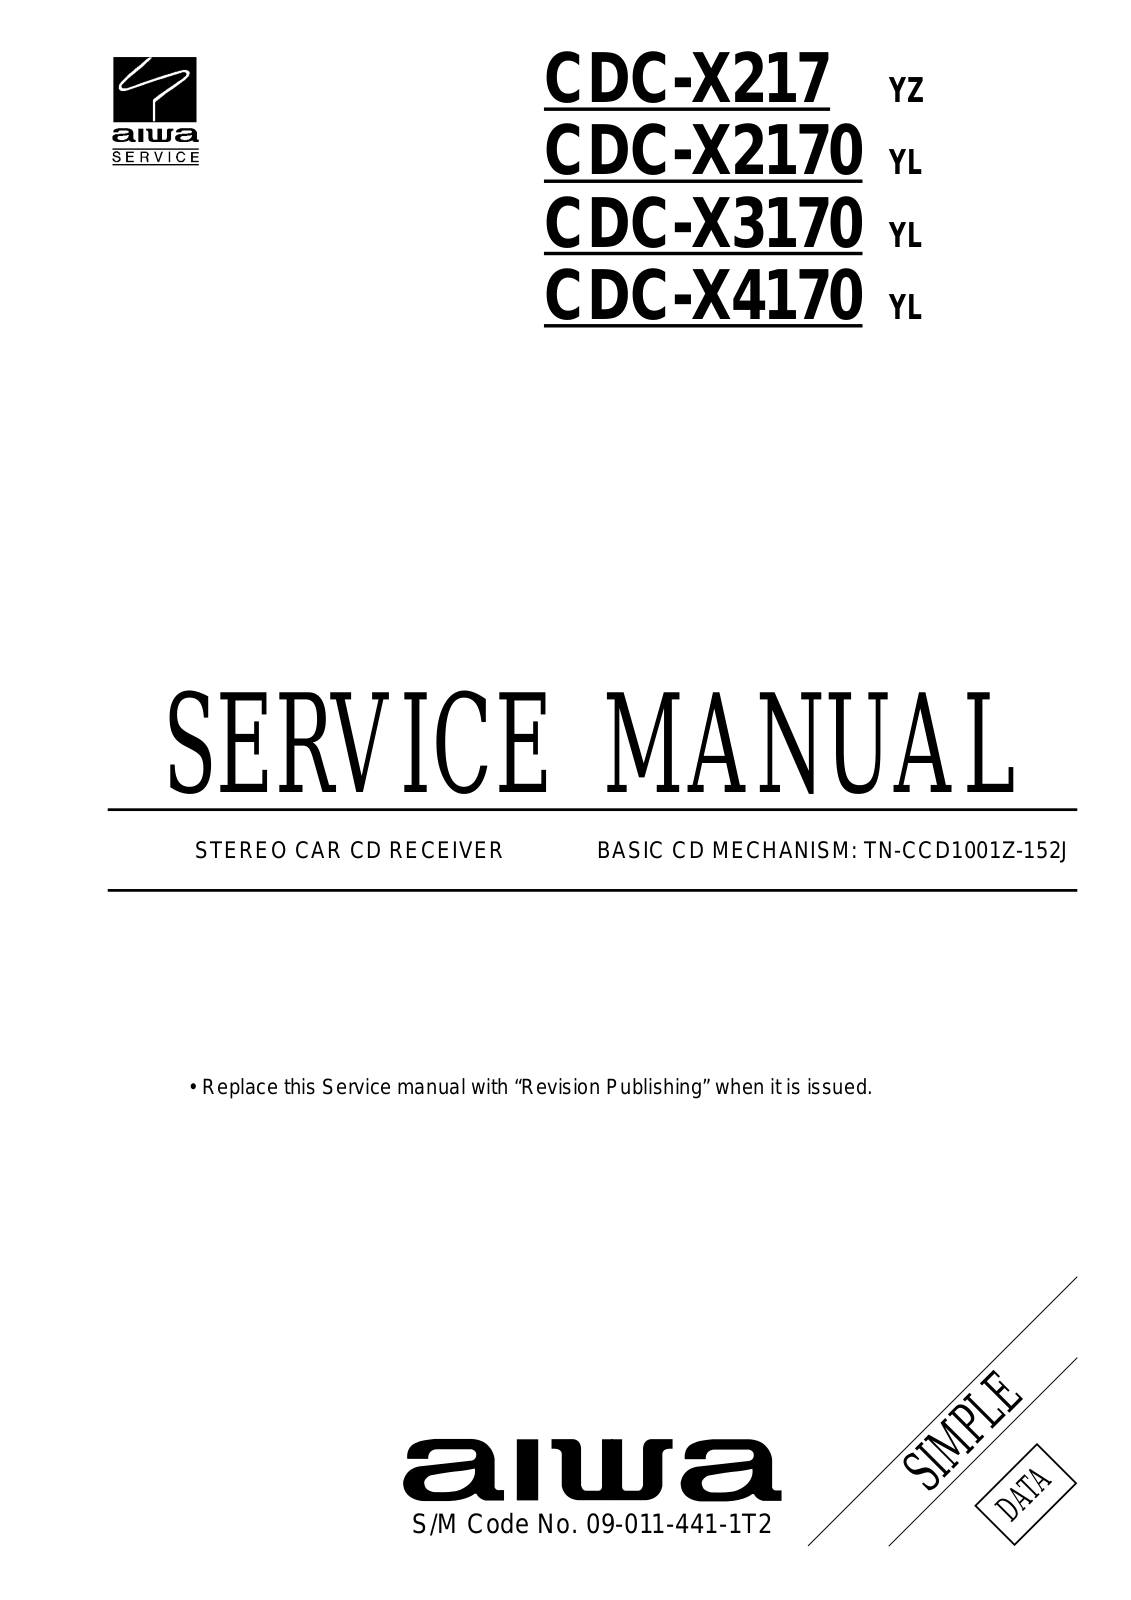 Aiwa CDC-X3170, CDC-X4170 Service Manual